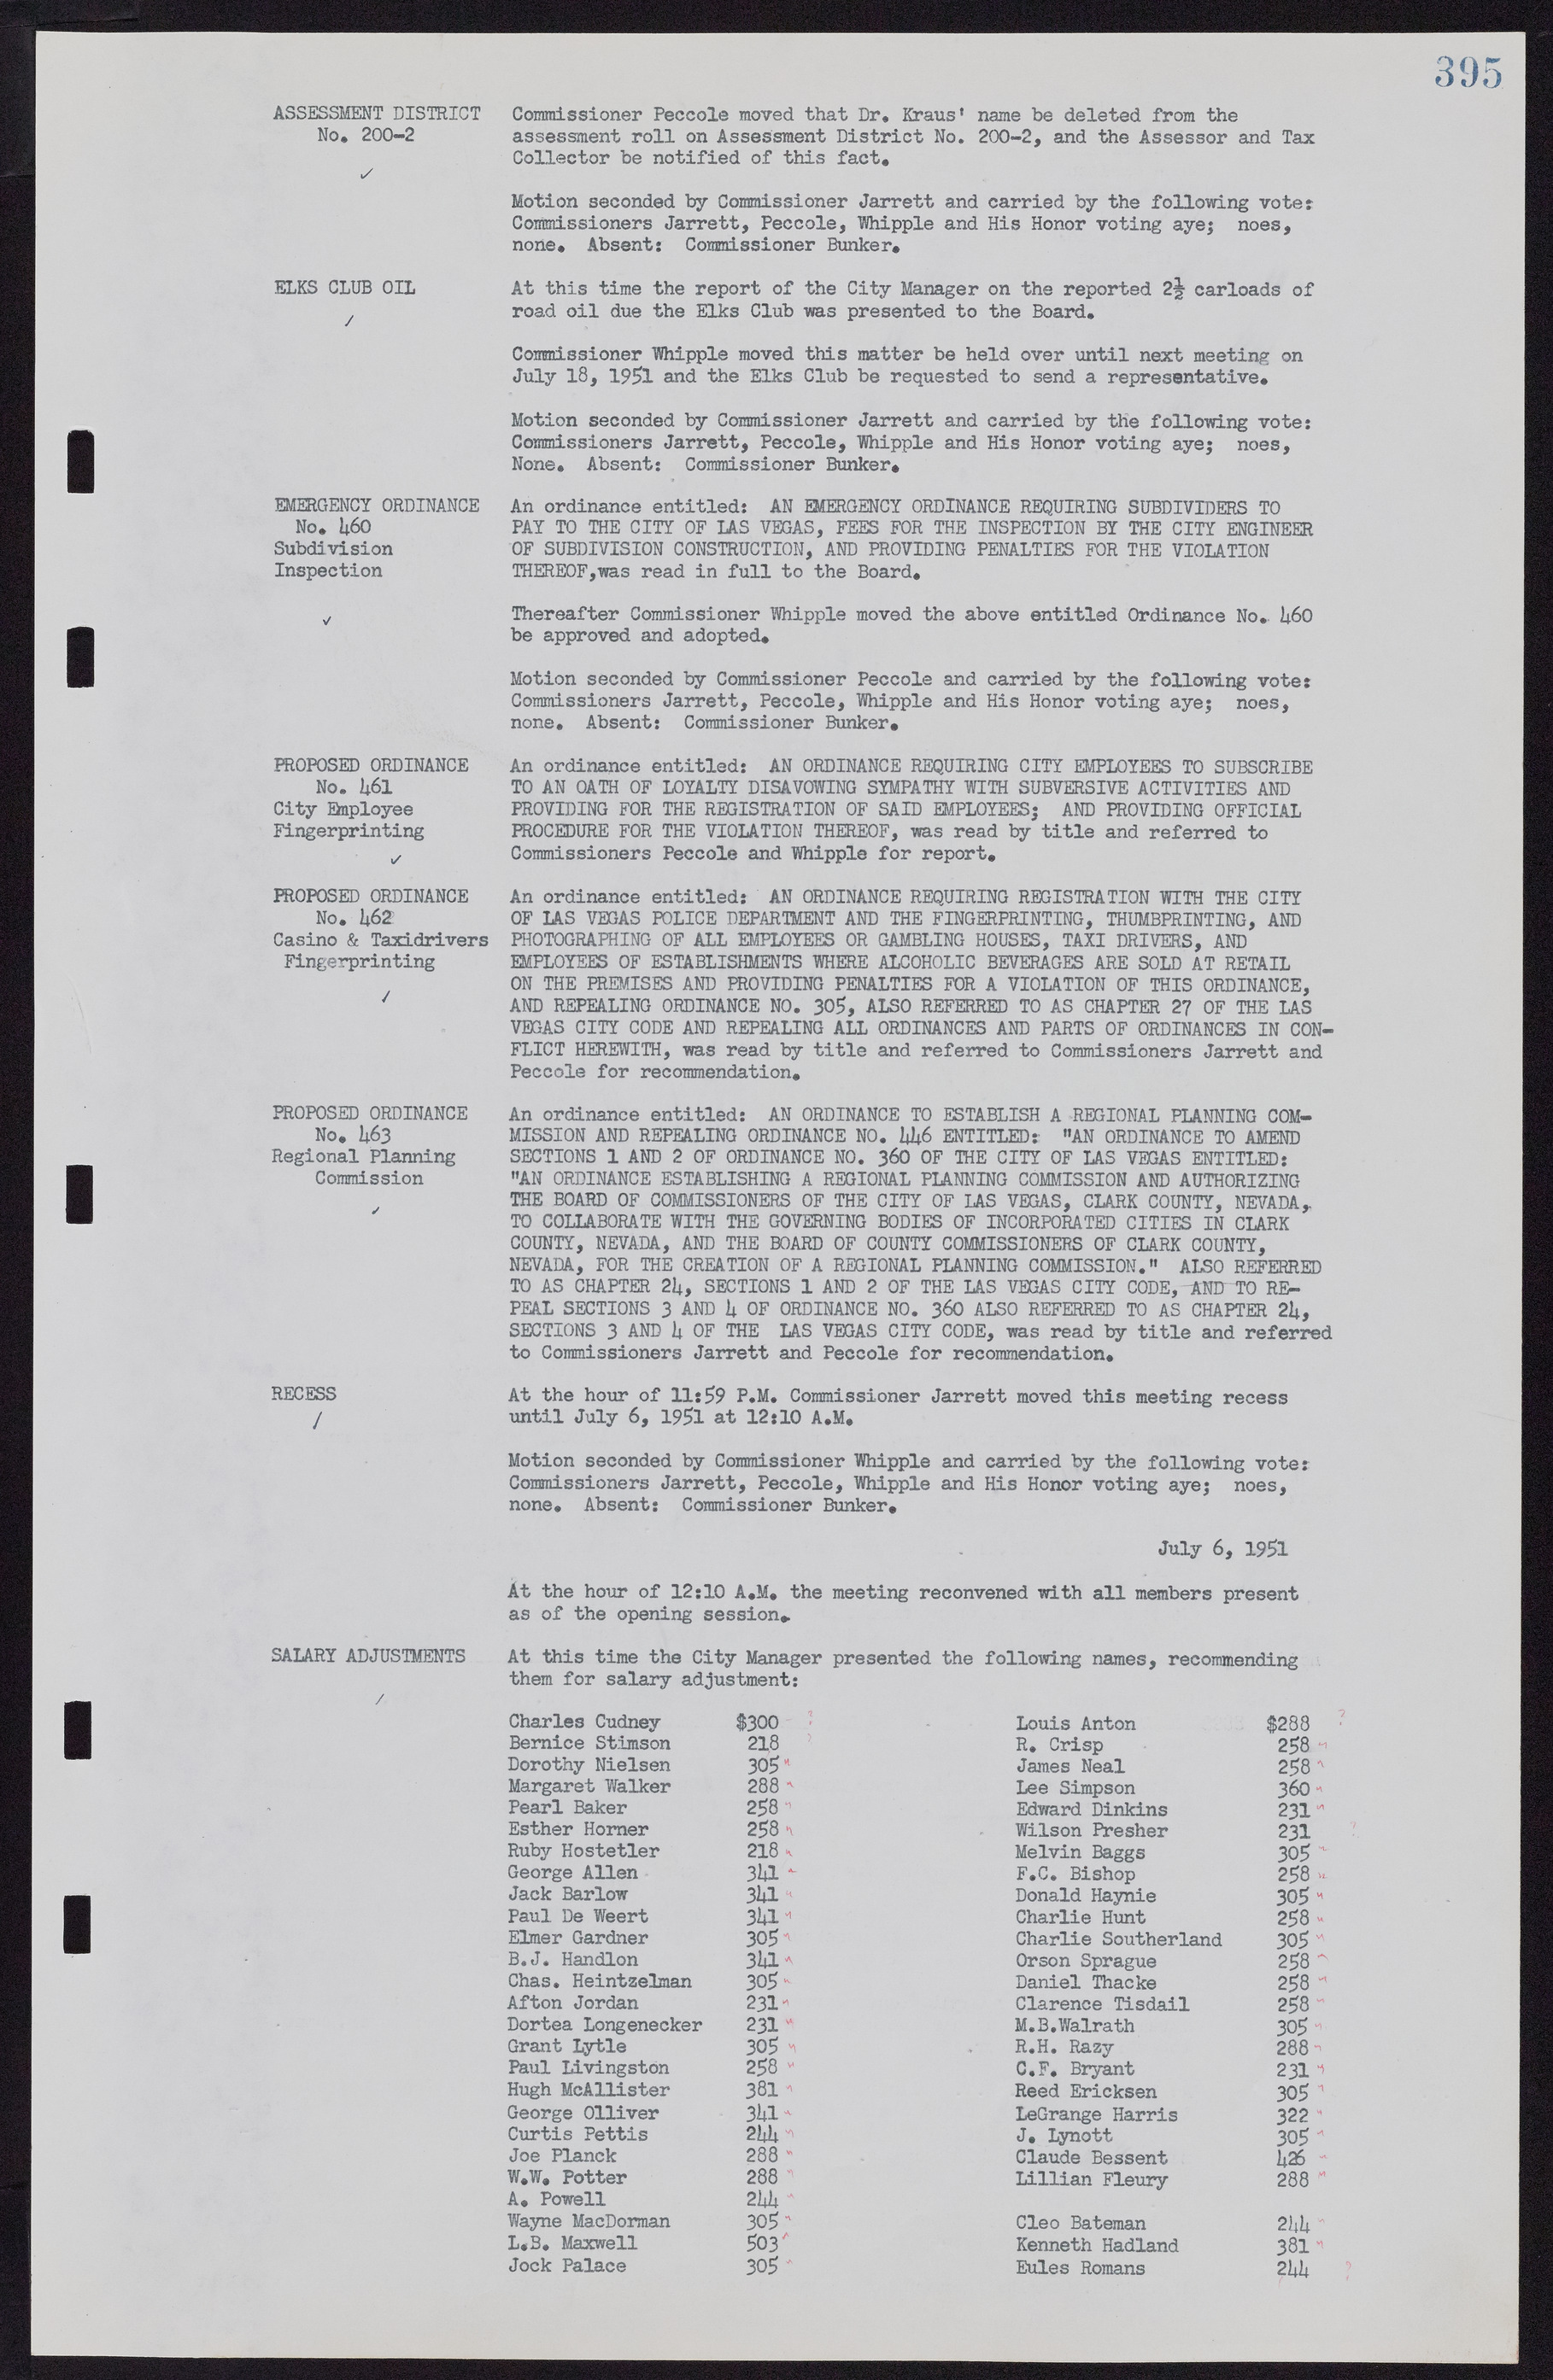 Las Vegas City Commission Minutes, November 7, 1949 to May 21, 1952, lvc000007-411